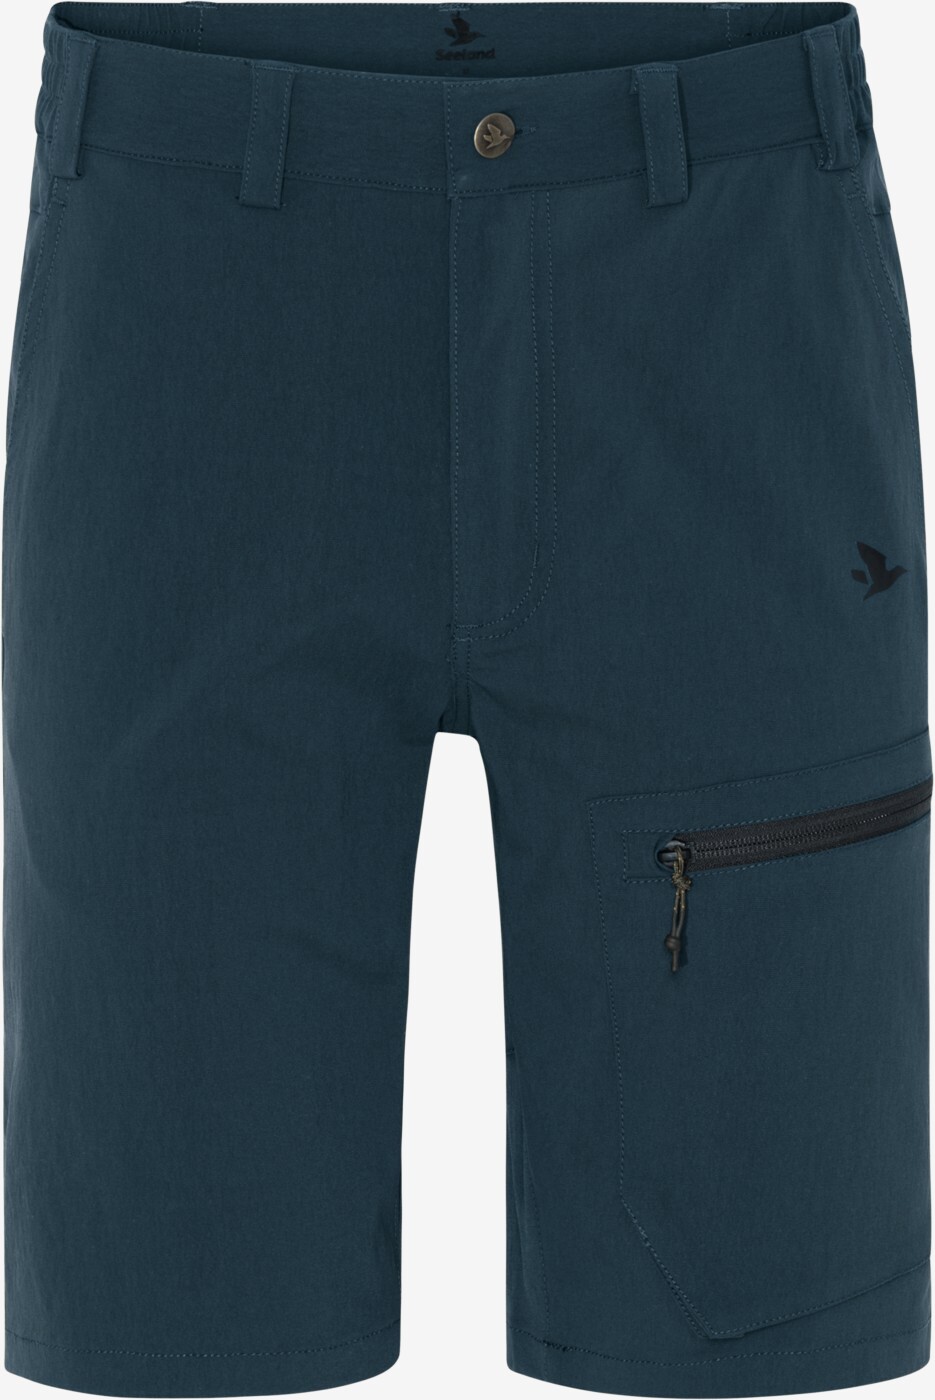 Seeland - Rowan Stretch shorts (Blå) - 58 (2XL)